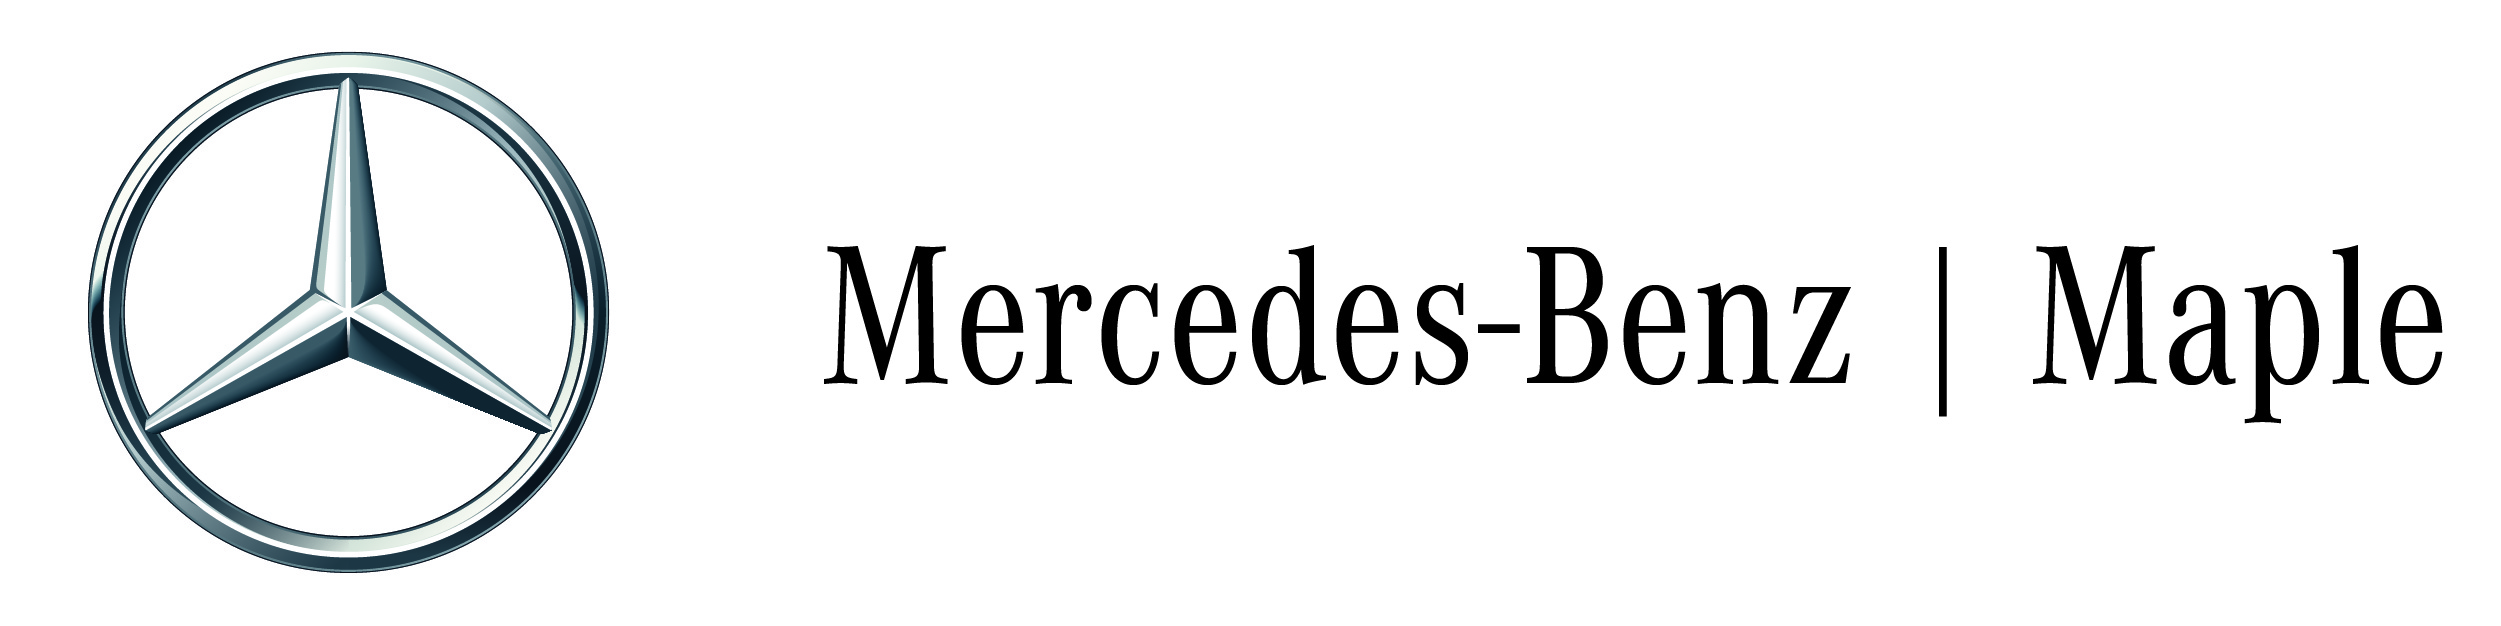 The Mercedes-Benz Maple logo 